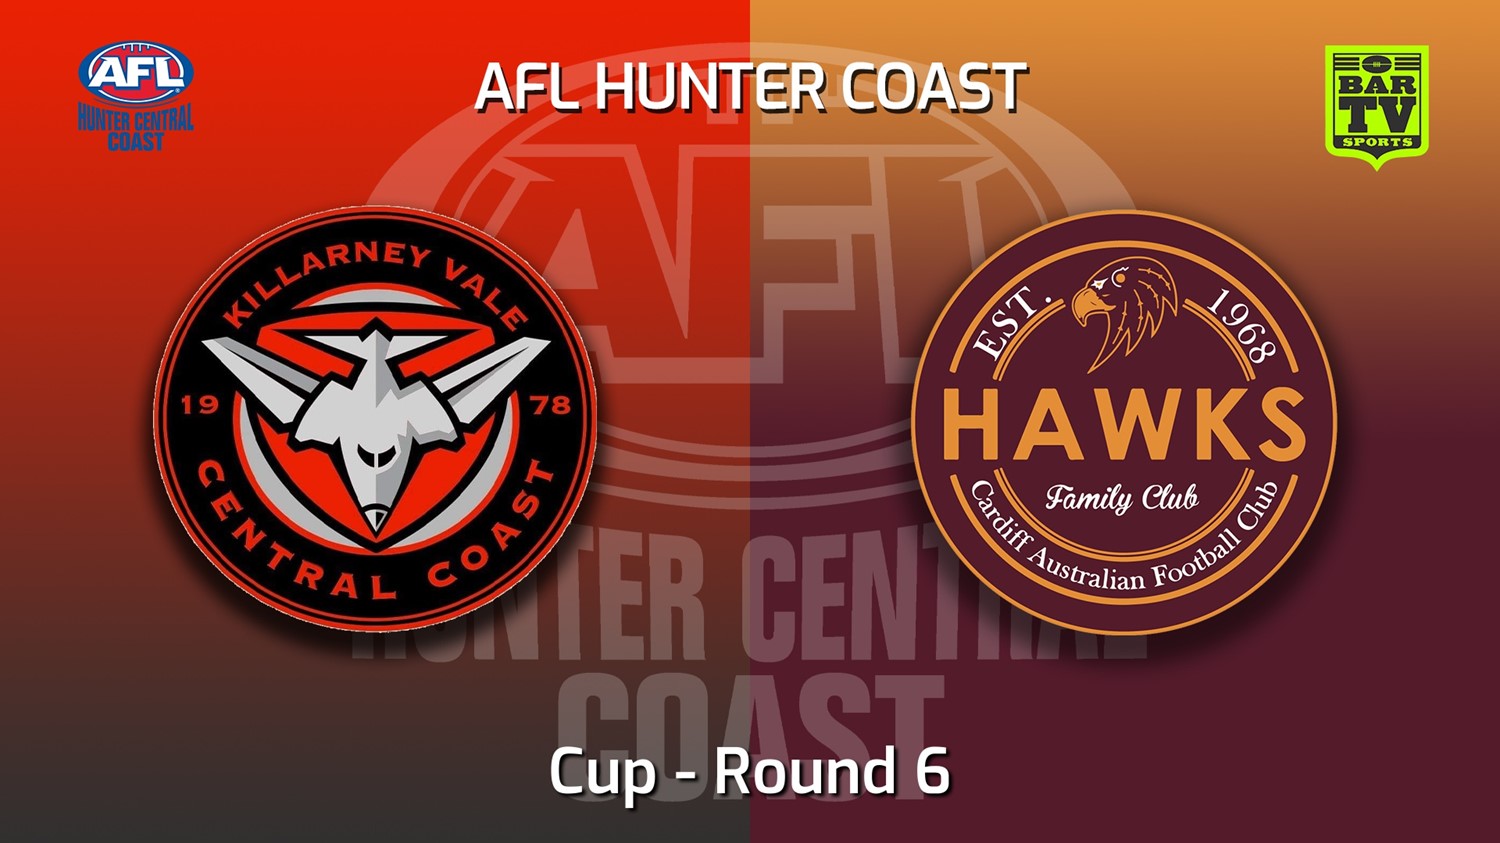 220604-AFL Hunter Central Coast Round 6 - Cup - Killarney Vale Bombers v Cardiff Hawks Minigame Slate Image